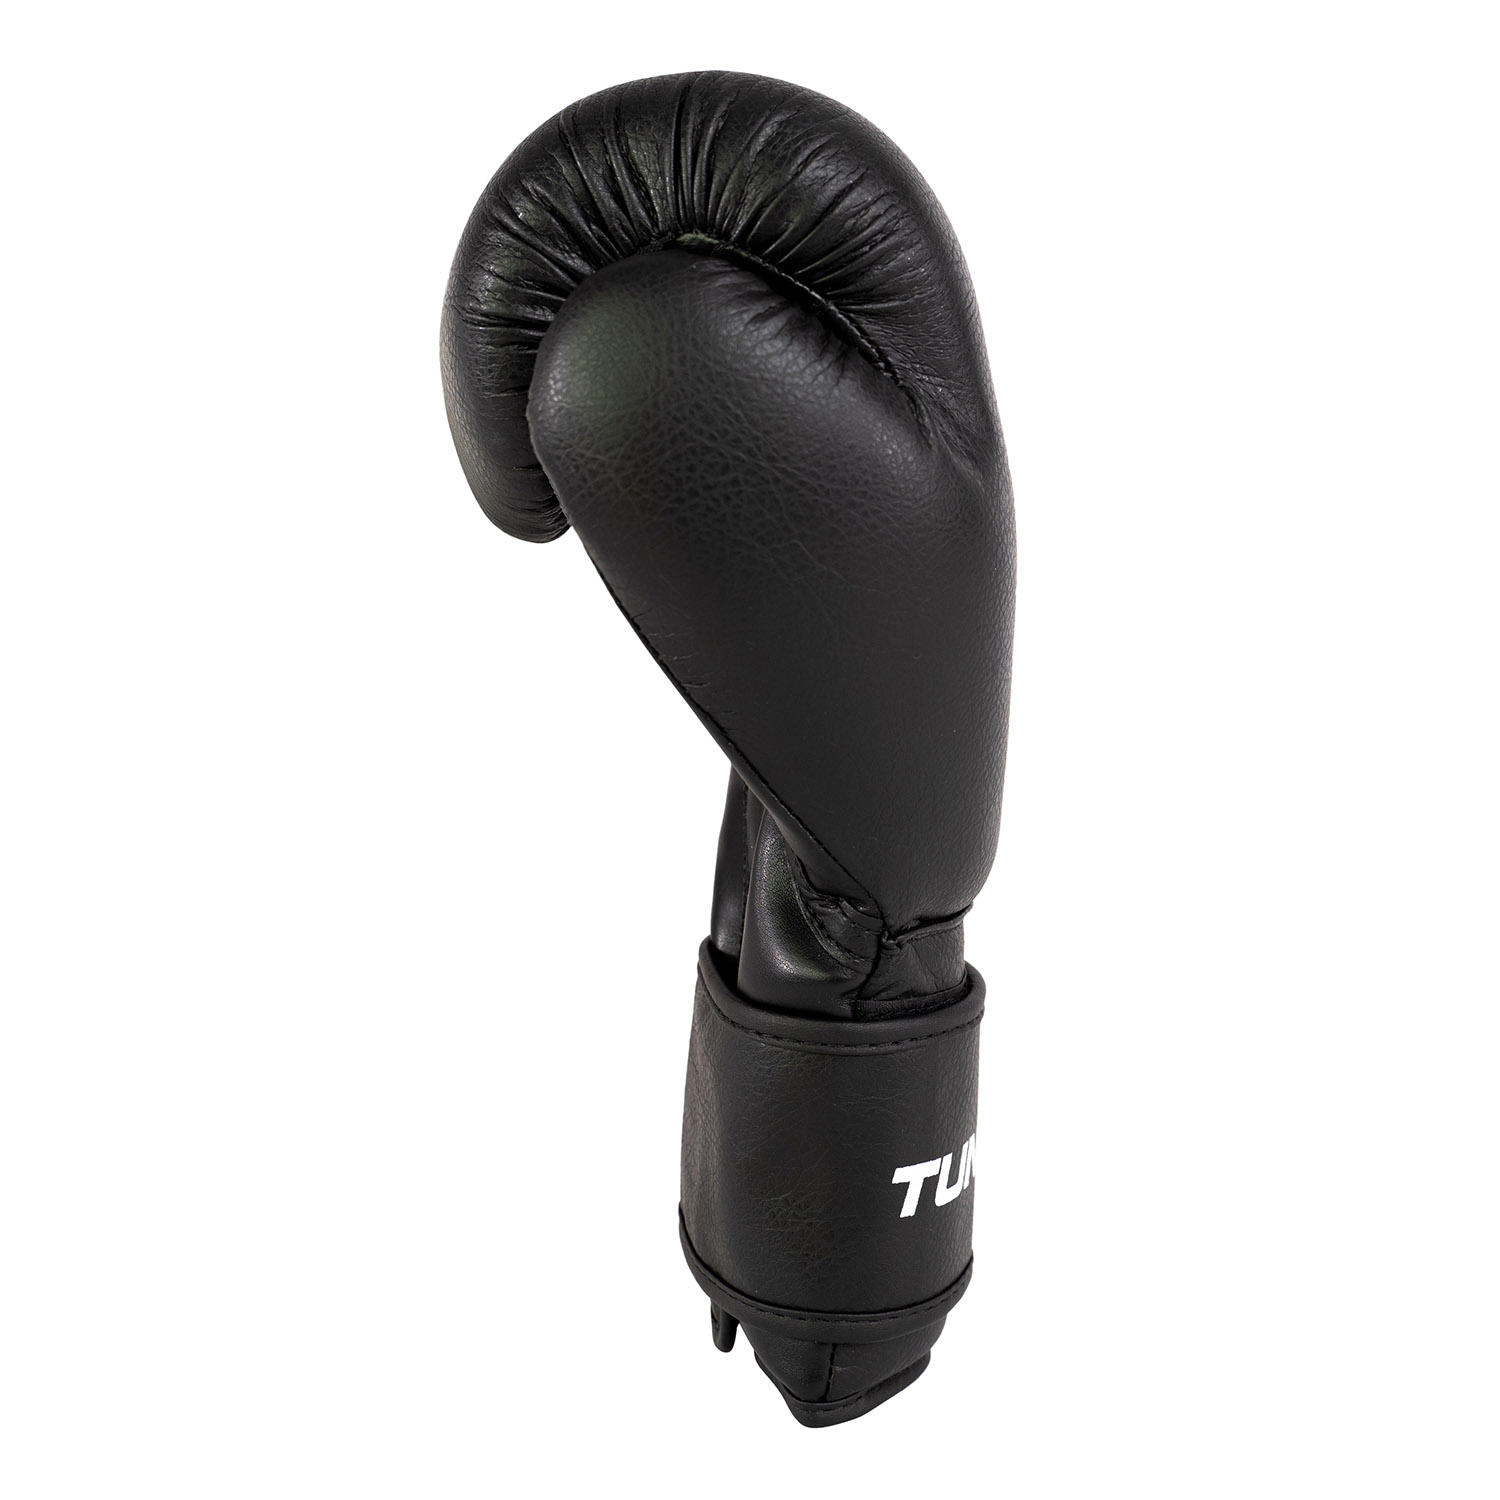 Allround Boxing Gloves - PU